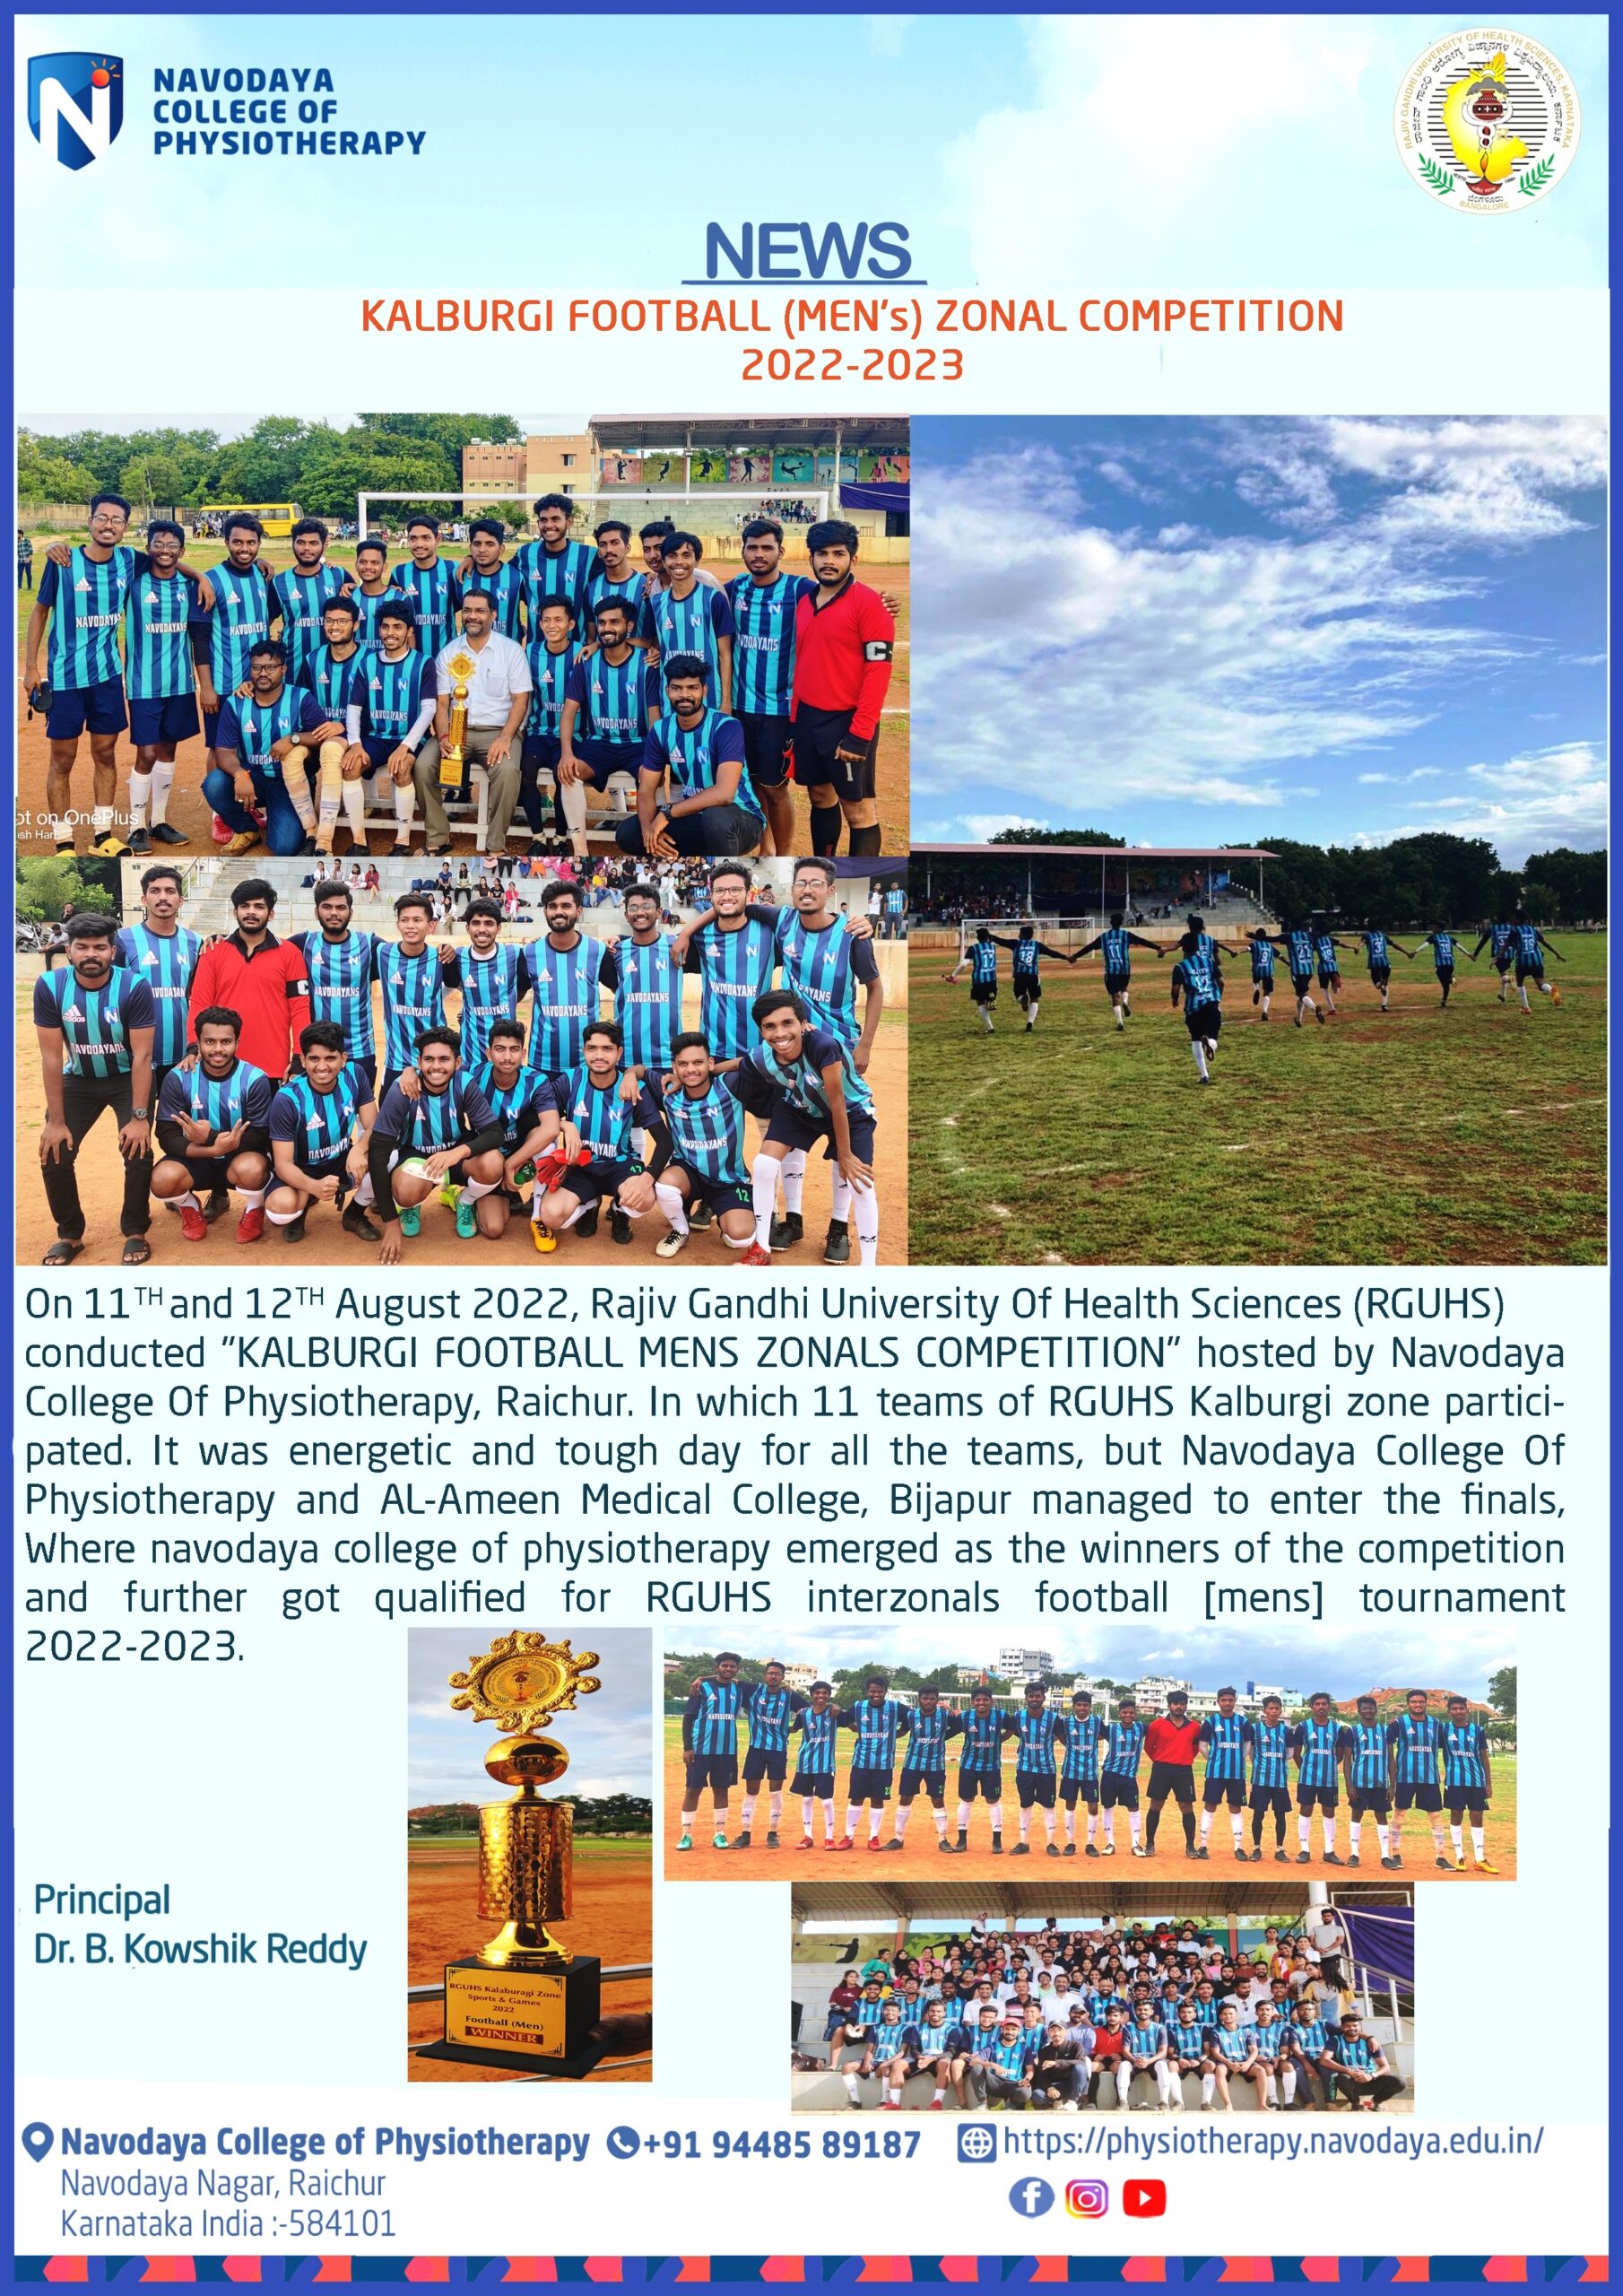 Kalburgi Foot Ball (Men’s) Zonal Competition 2022-2023